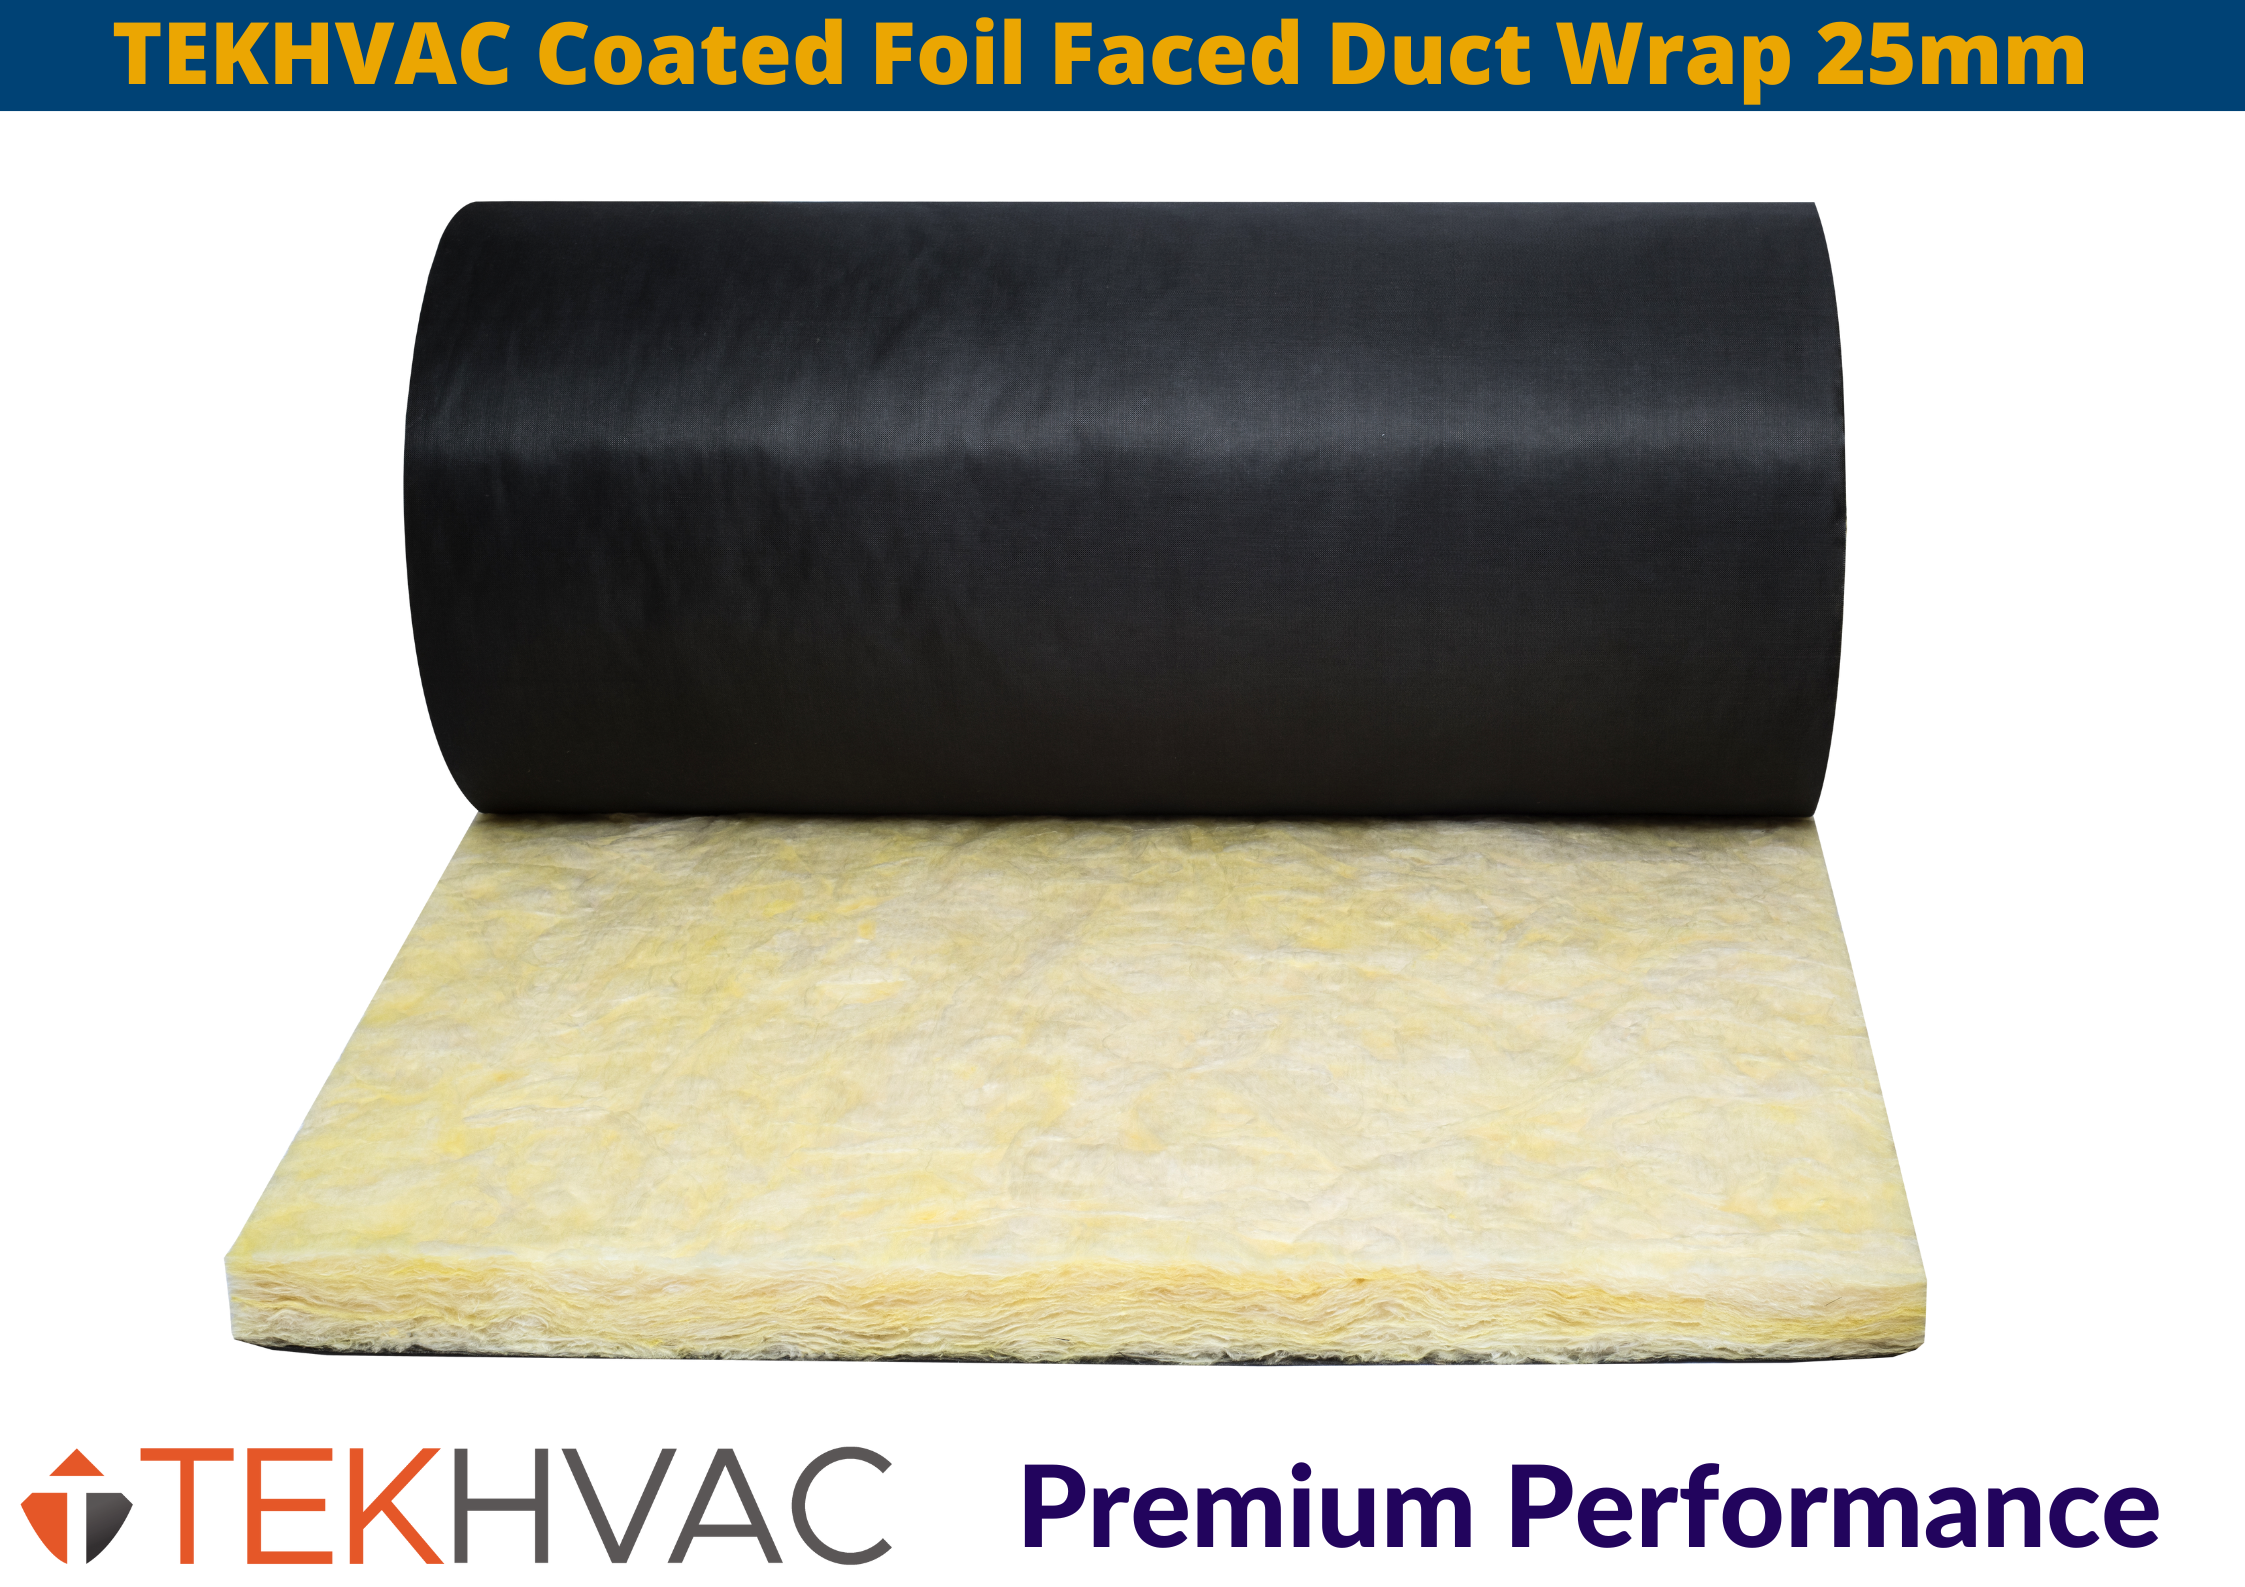 TekHVAC TEKHVAC Coated Foil Faced Duct Wrap 1200 x 25mm TEKHVAC Foil Faced Duct Wrap 1200 x 25mm | insulationuk.co.uk